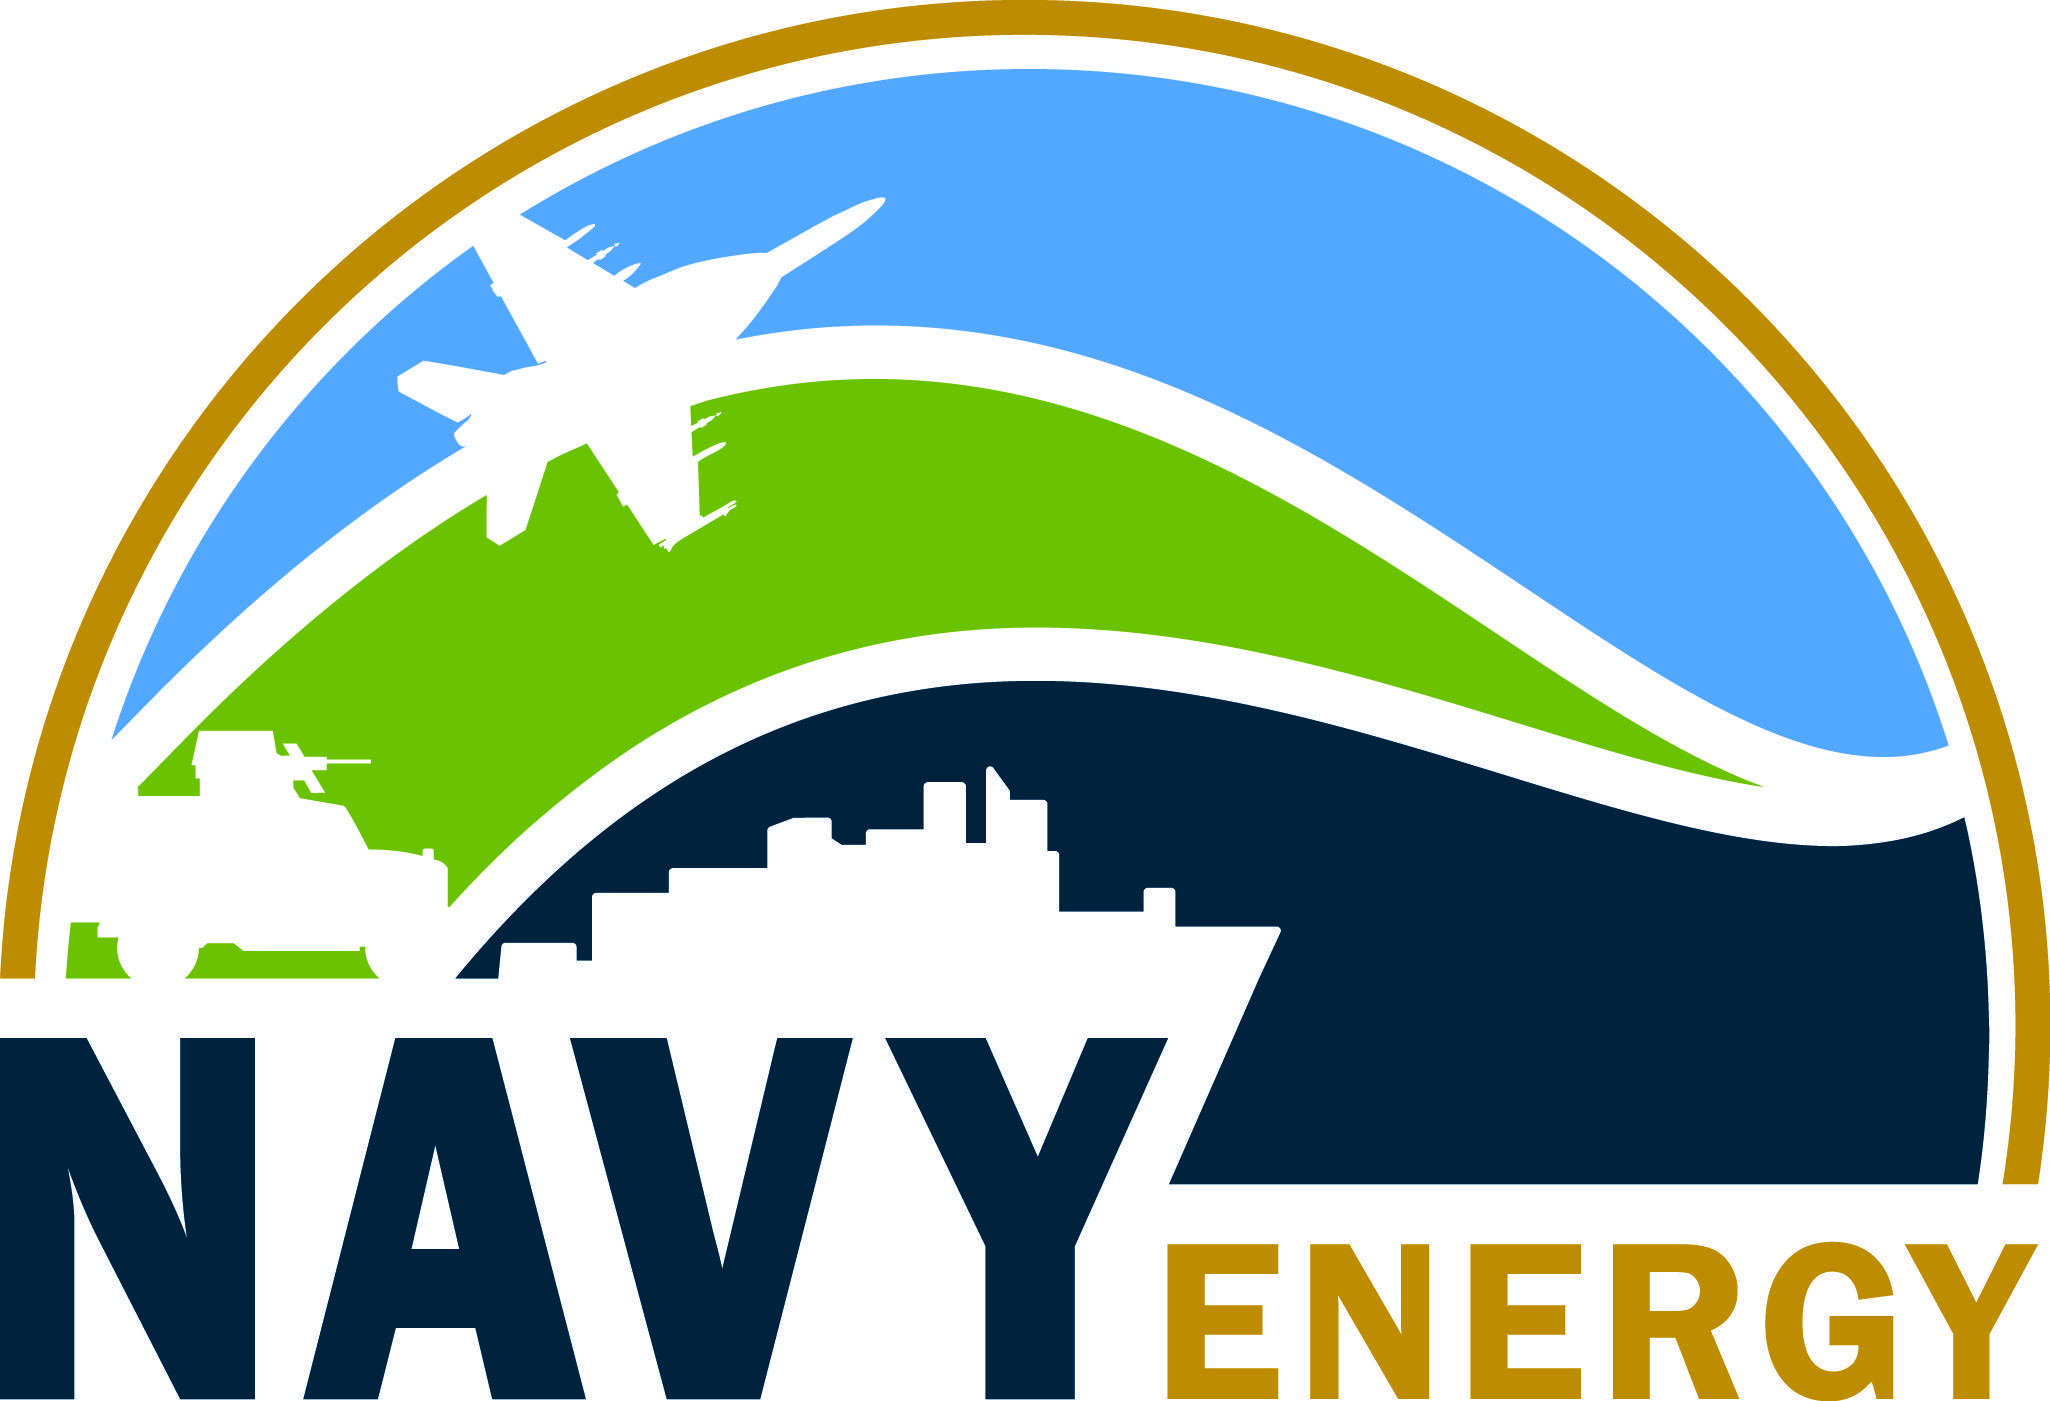 NAVSEA Logo - Energy Initiatives